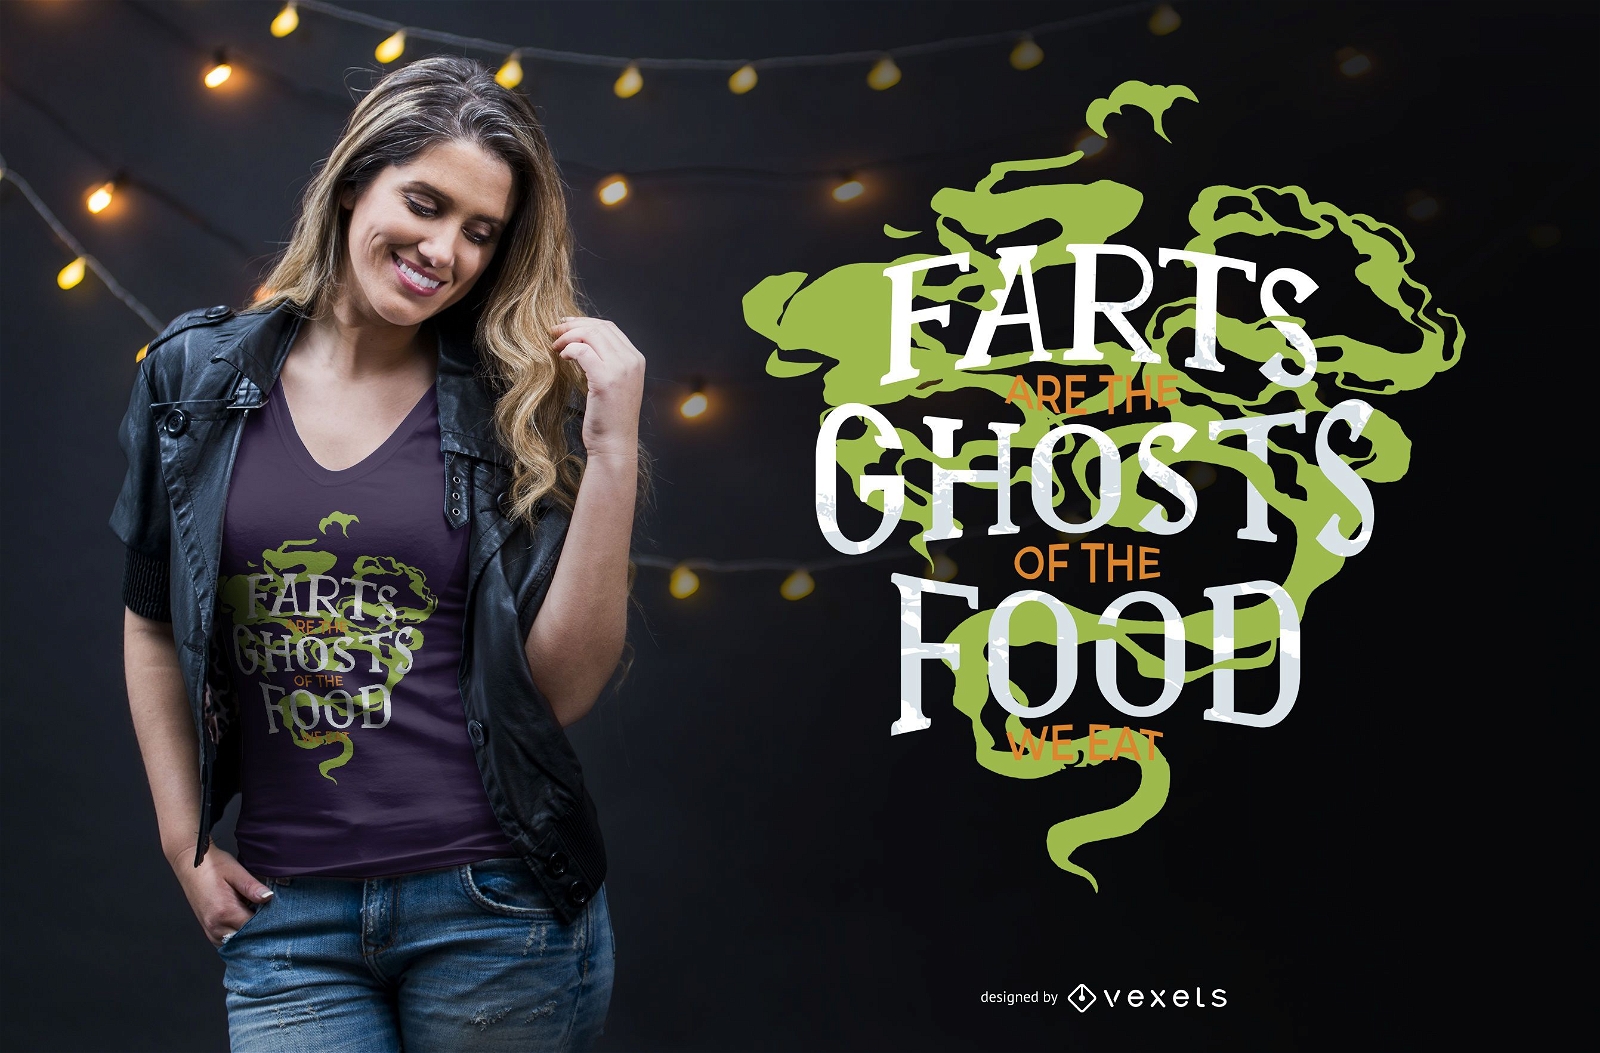 Diseño de camiseta Fart Ghost Funny Quote